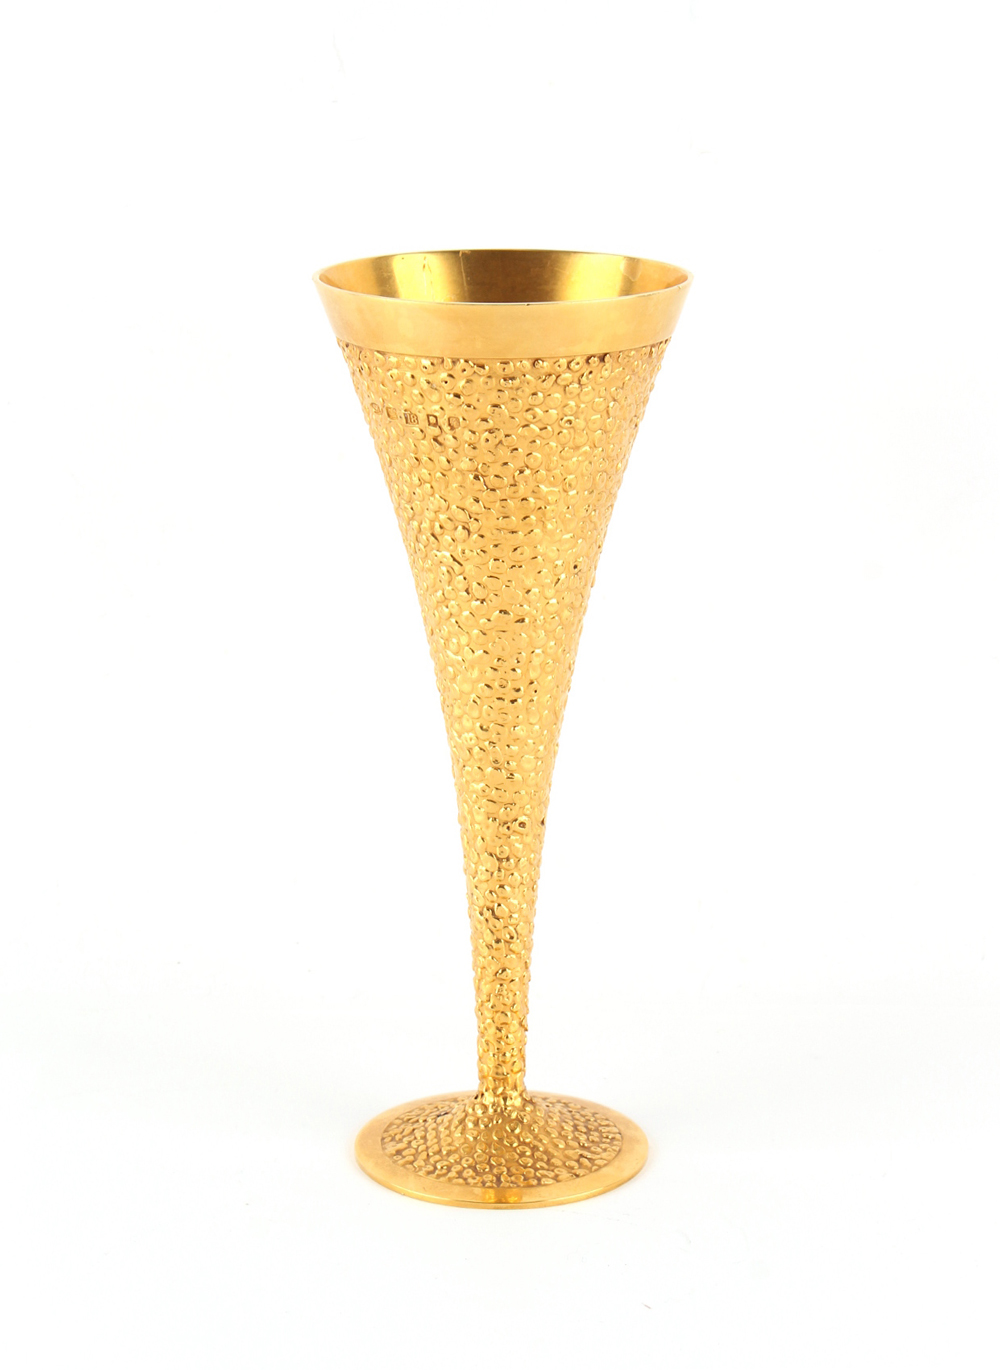 The Stuart Devlin gold goblet sold for £13,000 at Semley’s final sale of 2022